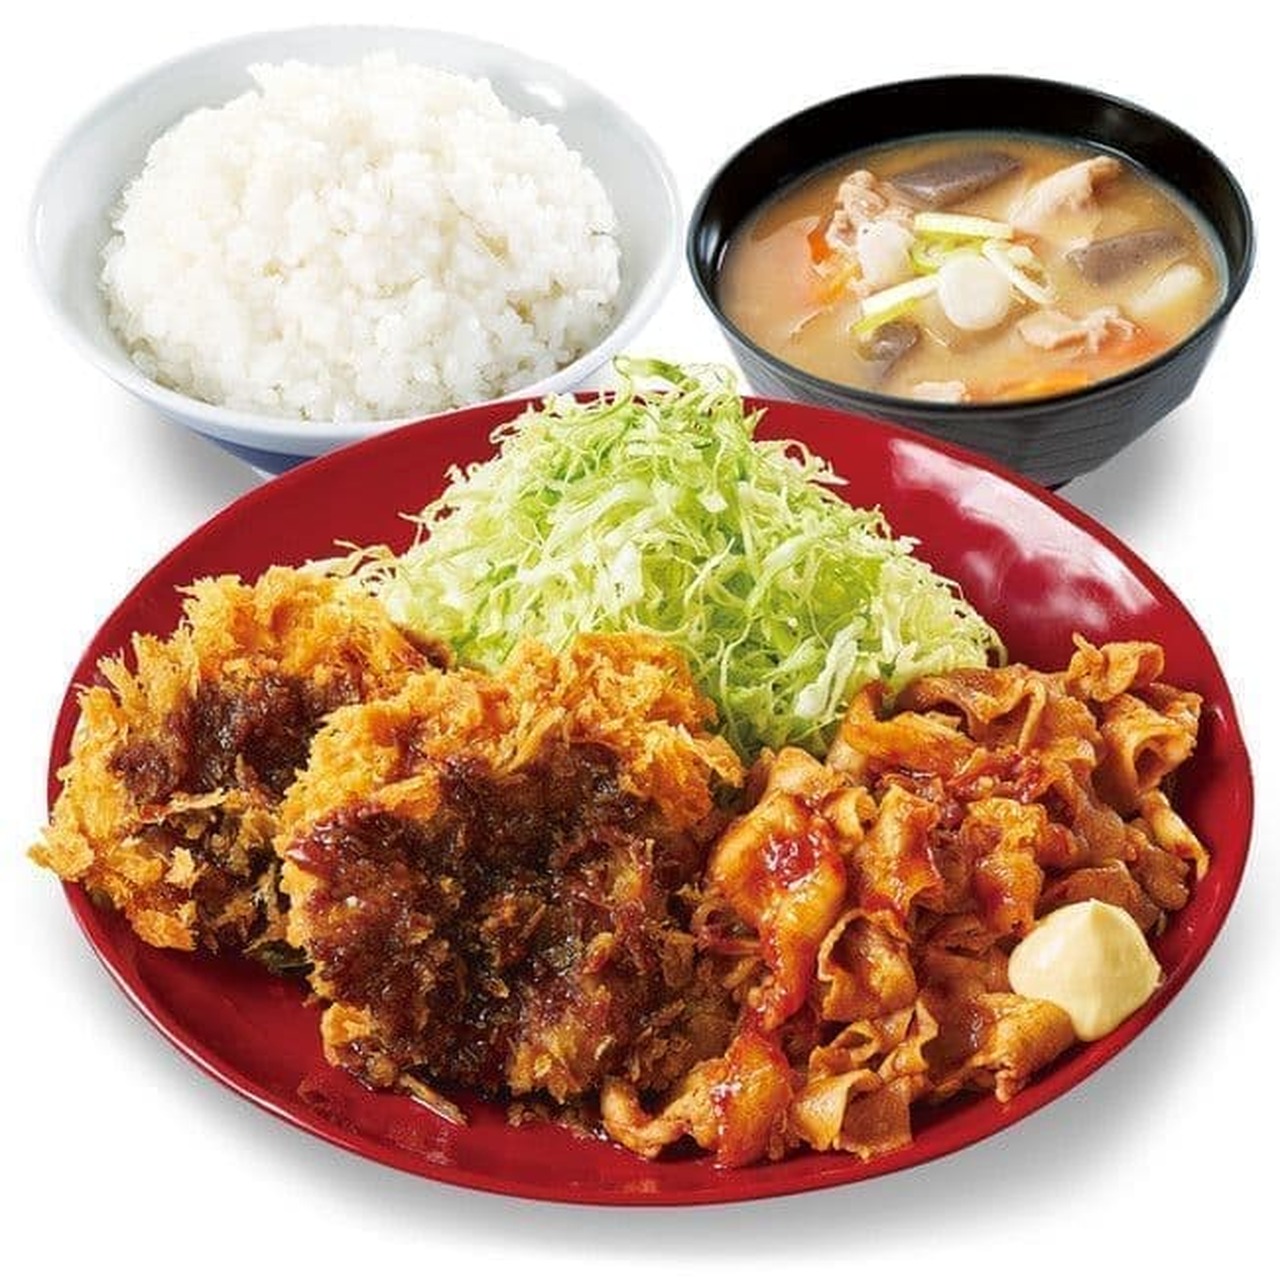 Katsuya "pork kimchi and chicken sauce cutlet set meal"